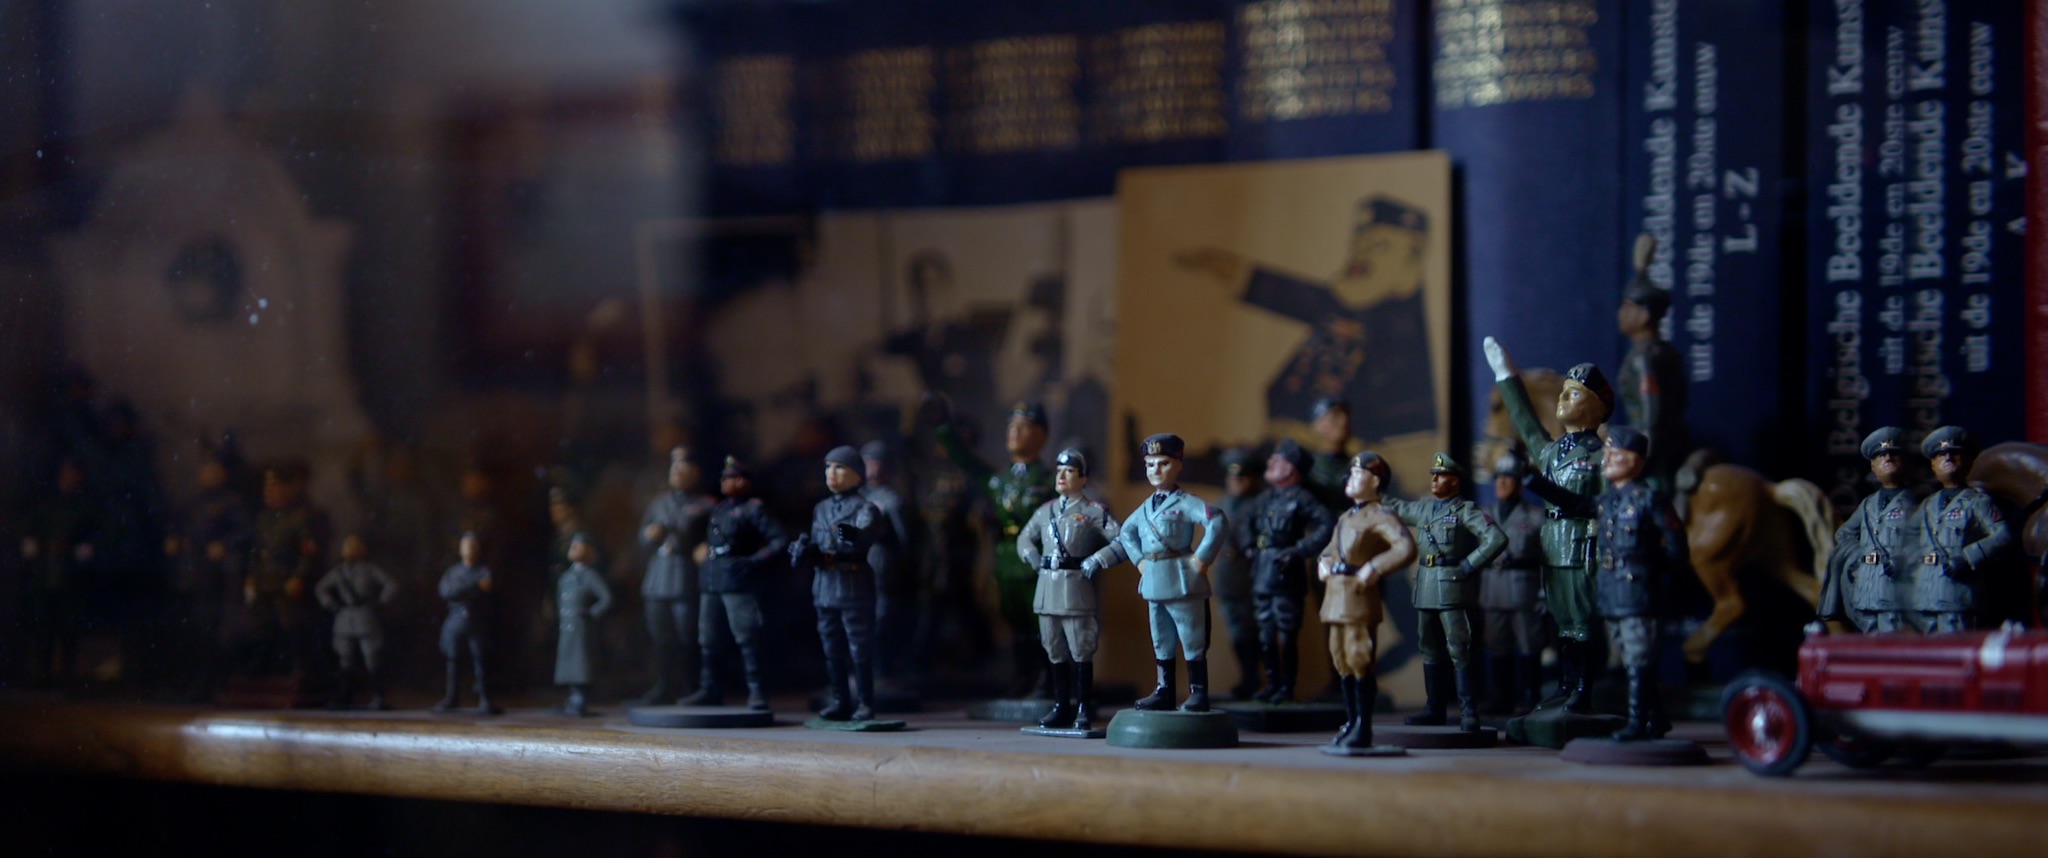 Fascist figurines, Mussolini, curiosities, militaria, fascist salute